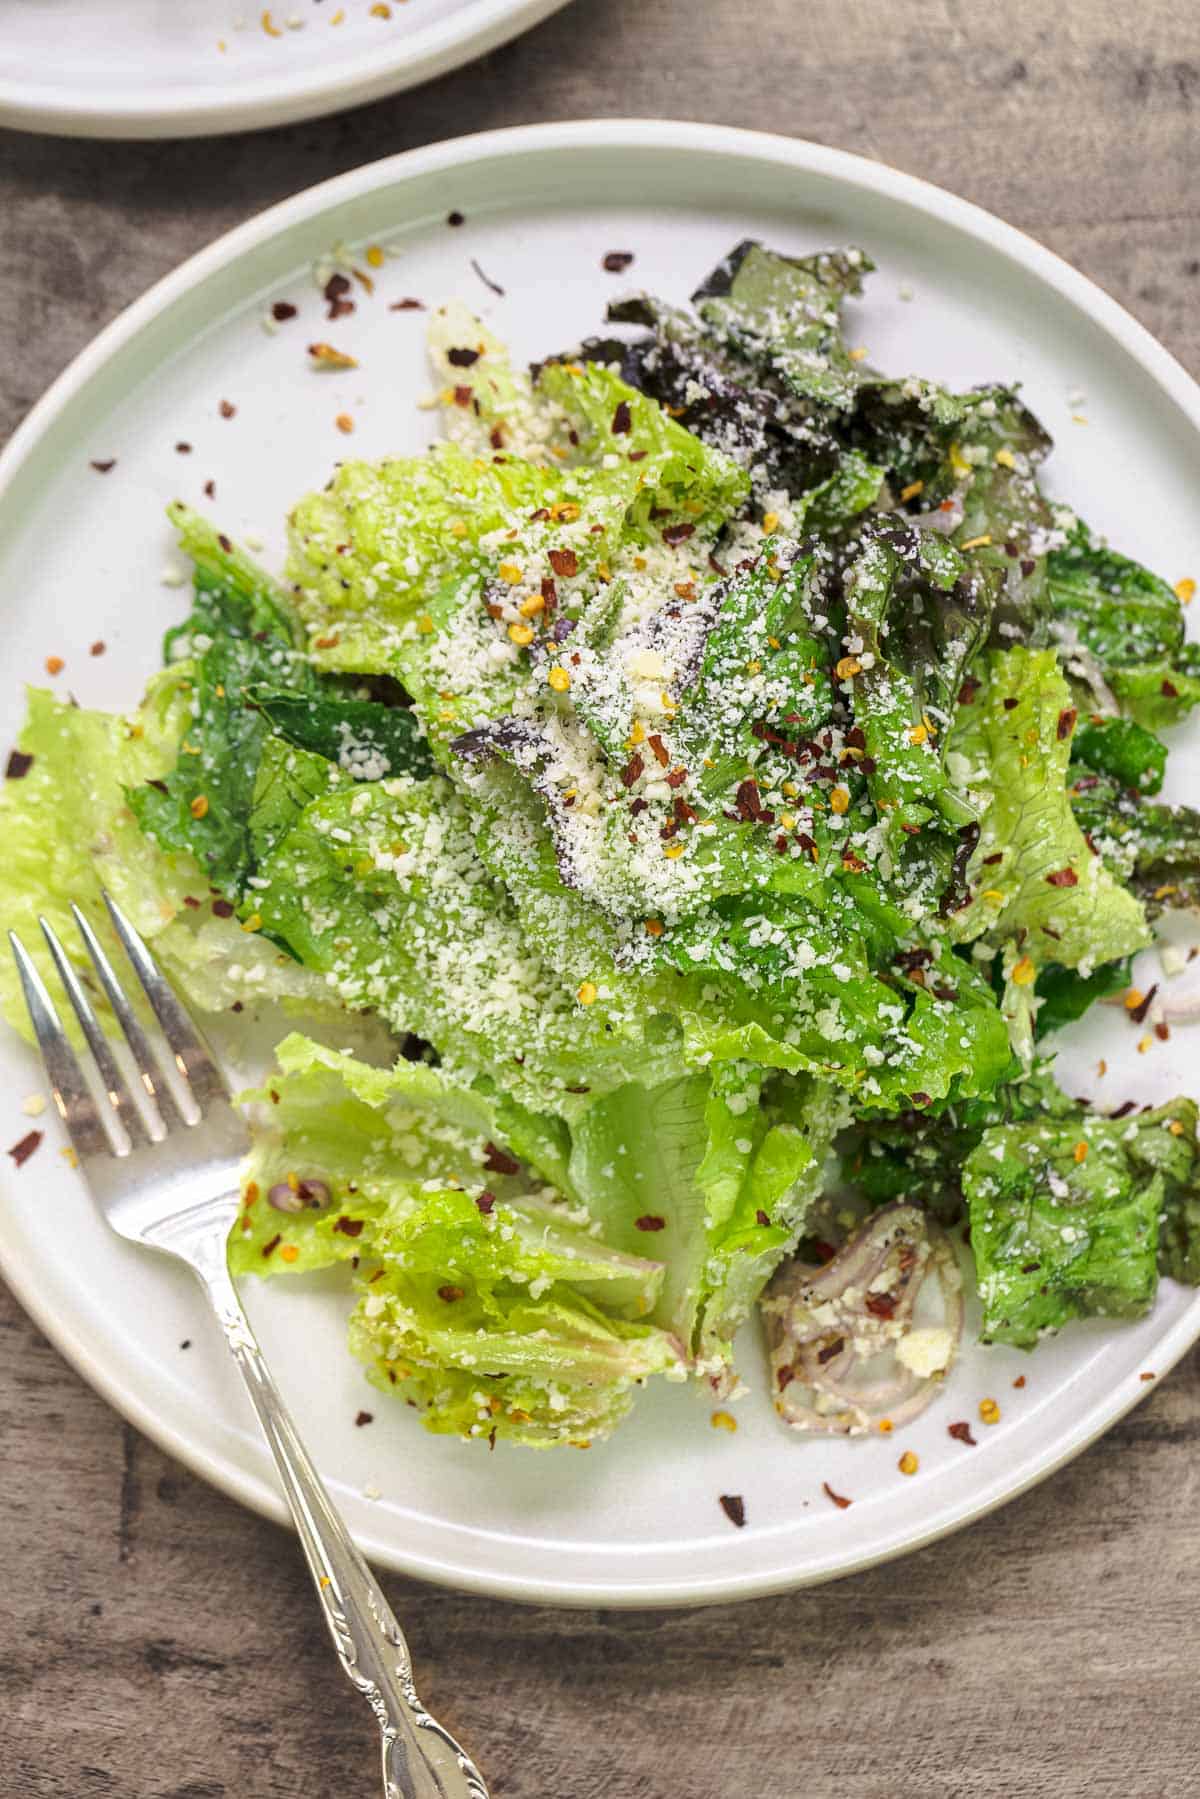 The Ultimate Salad Bowl - Be Good Organics